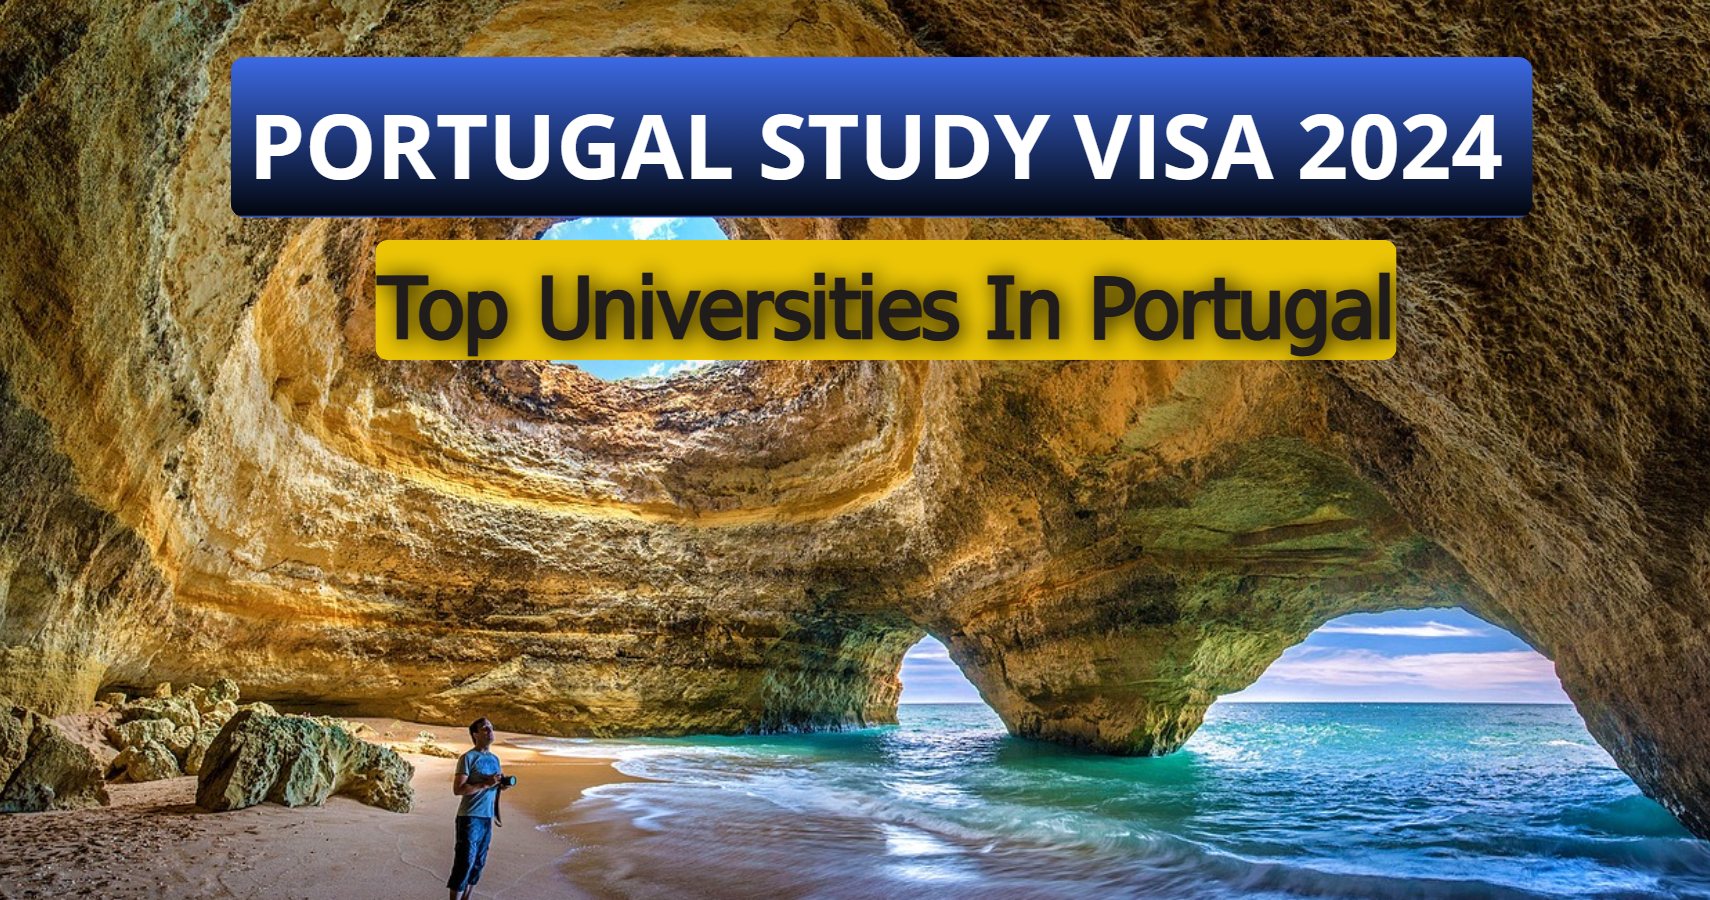 Portugal Study Visa 2024